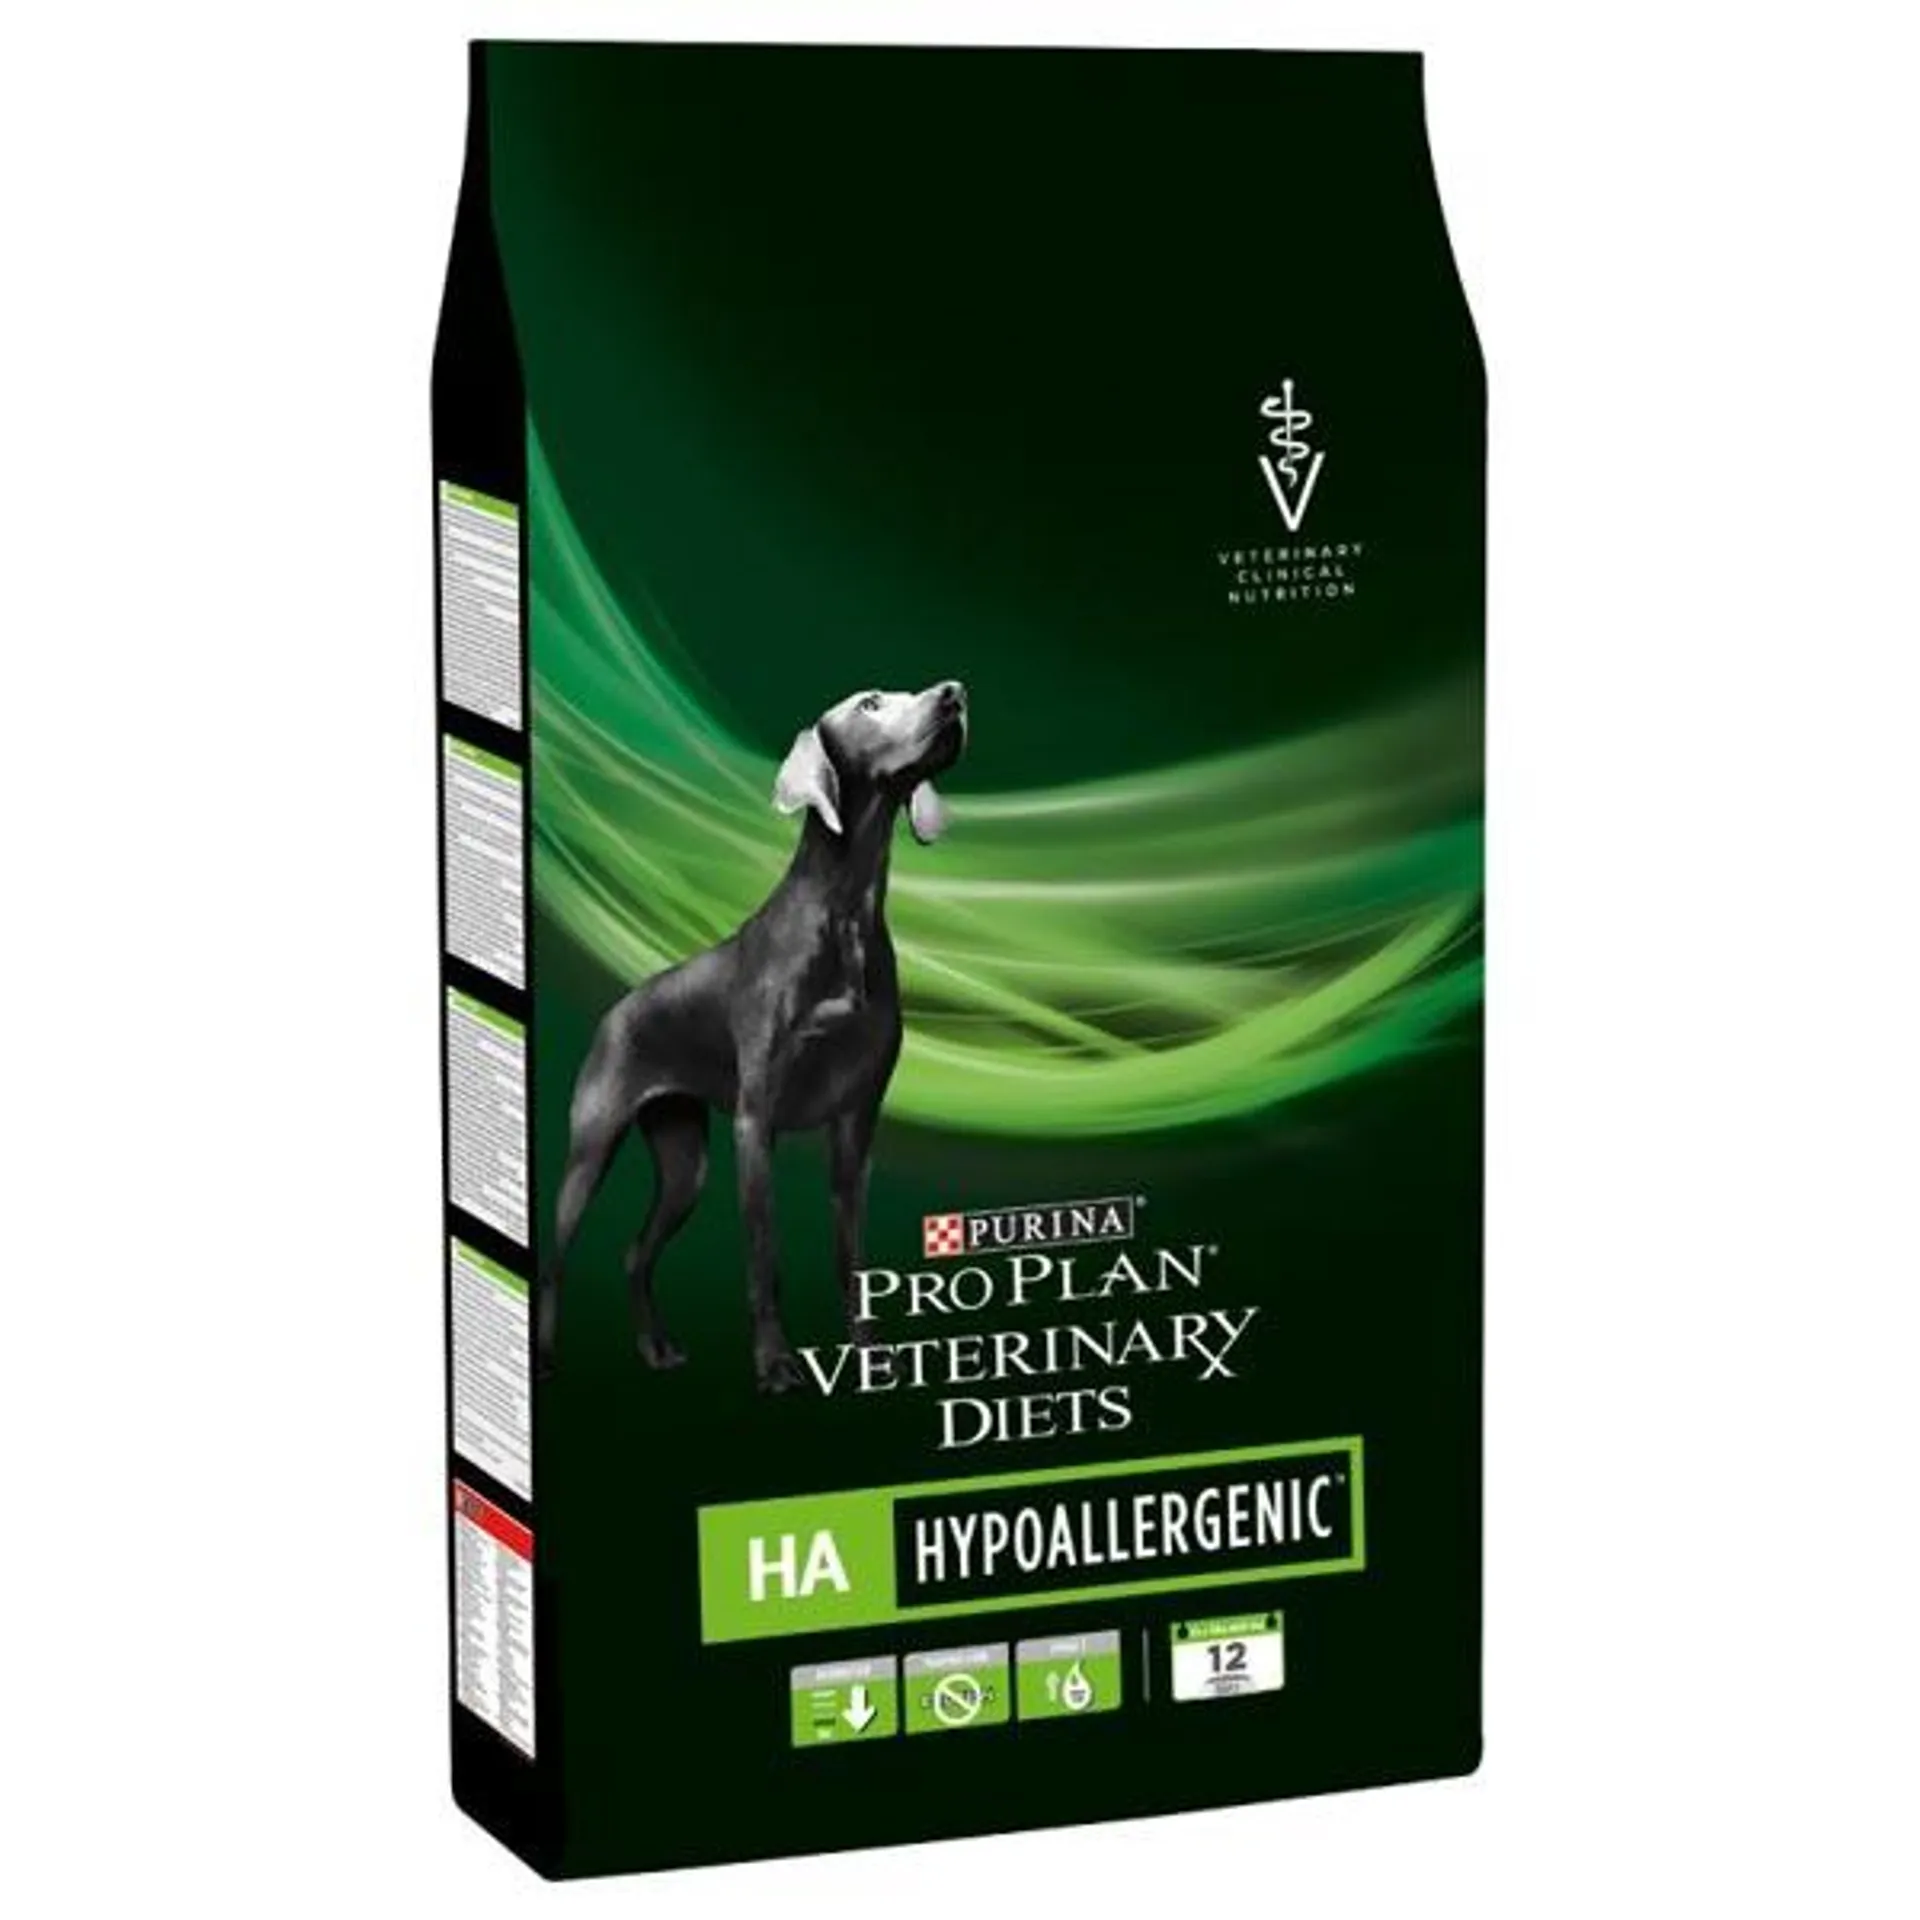 Nestle' Purina - Pro Plan Veterinary Diets Hypoallergenic HA